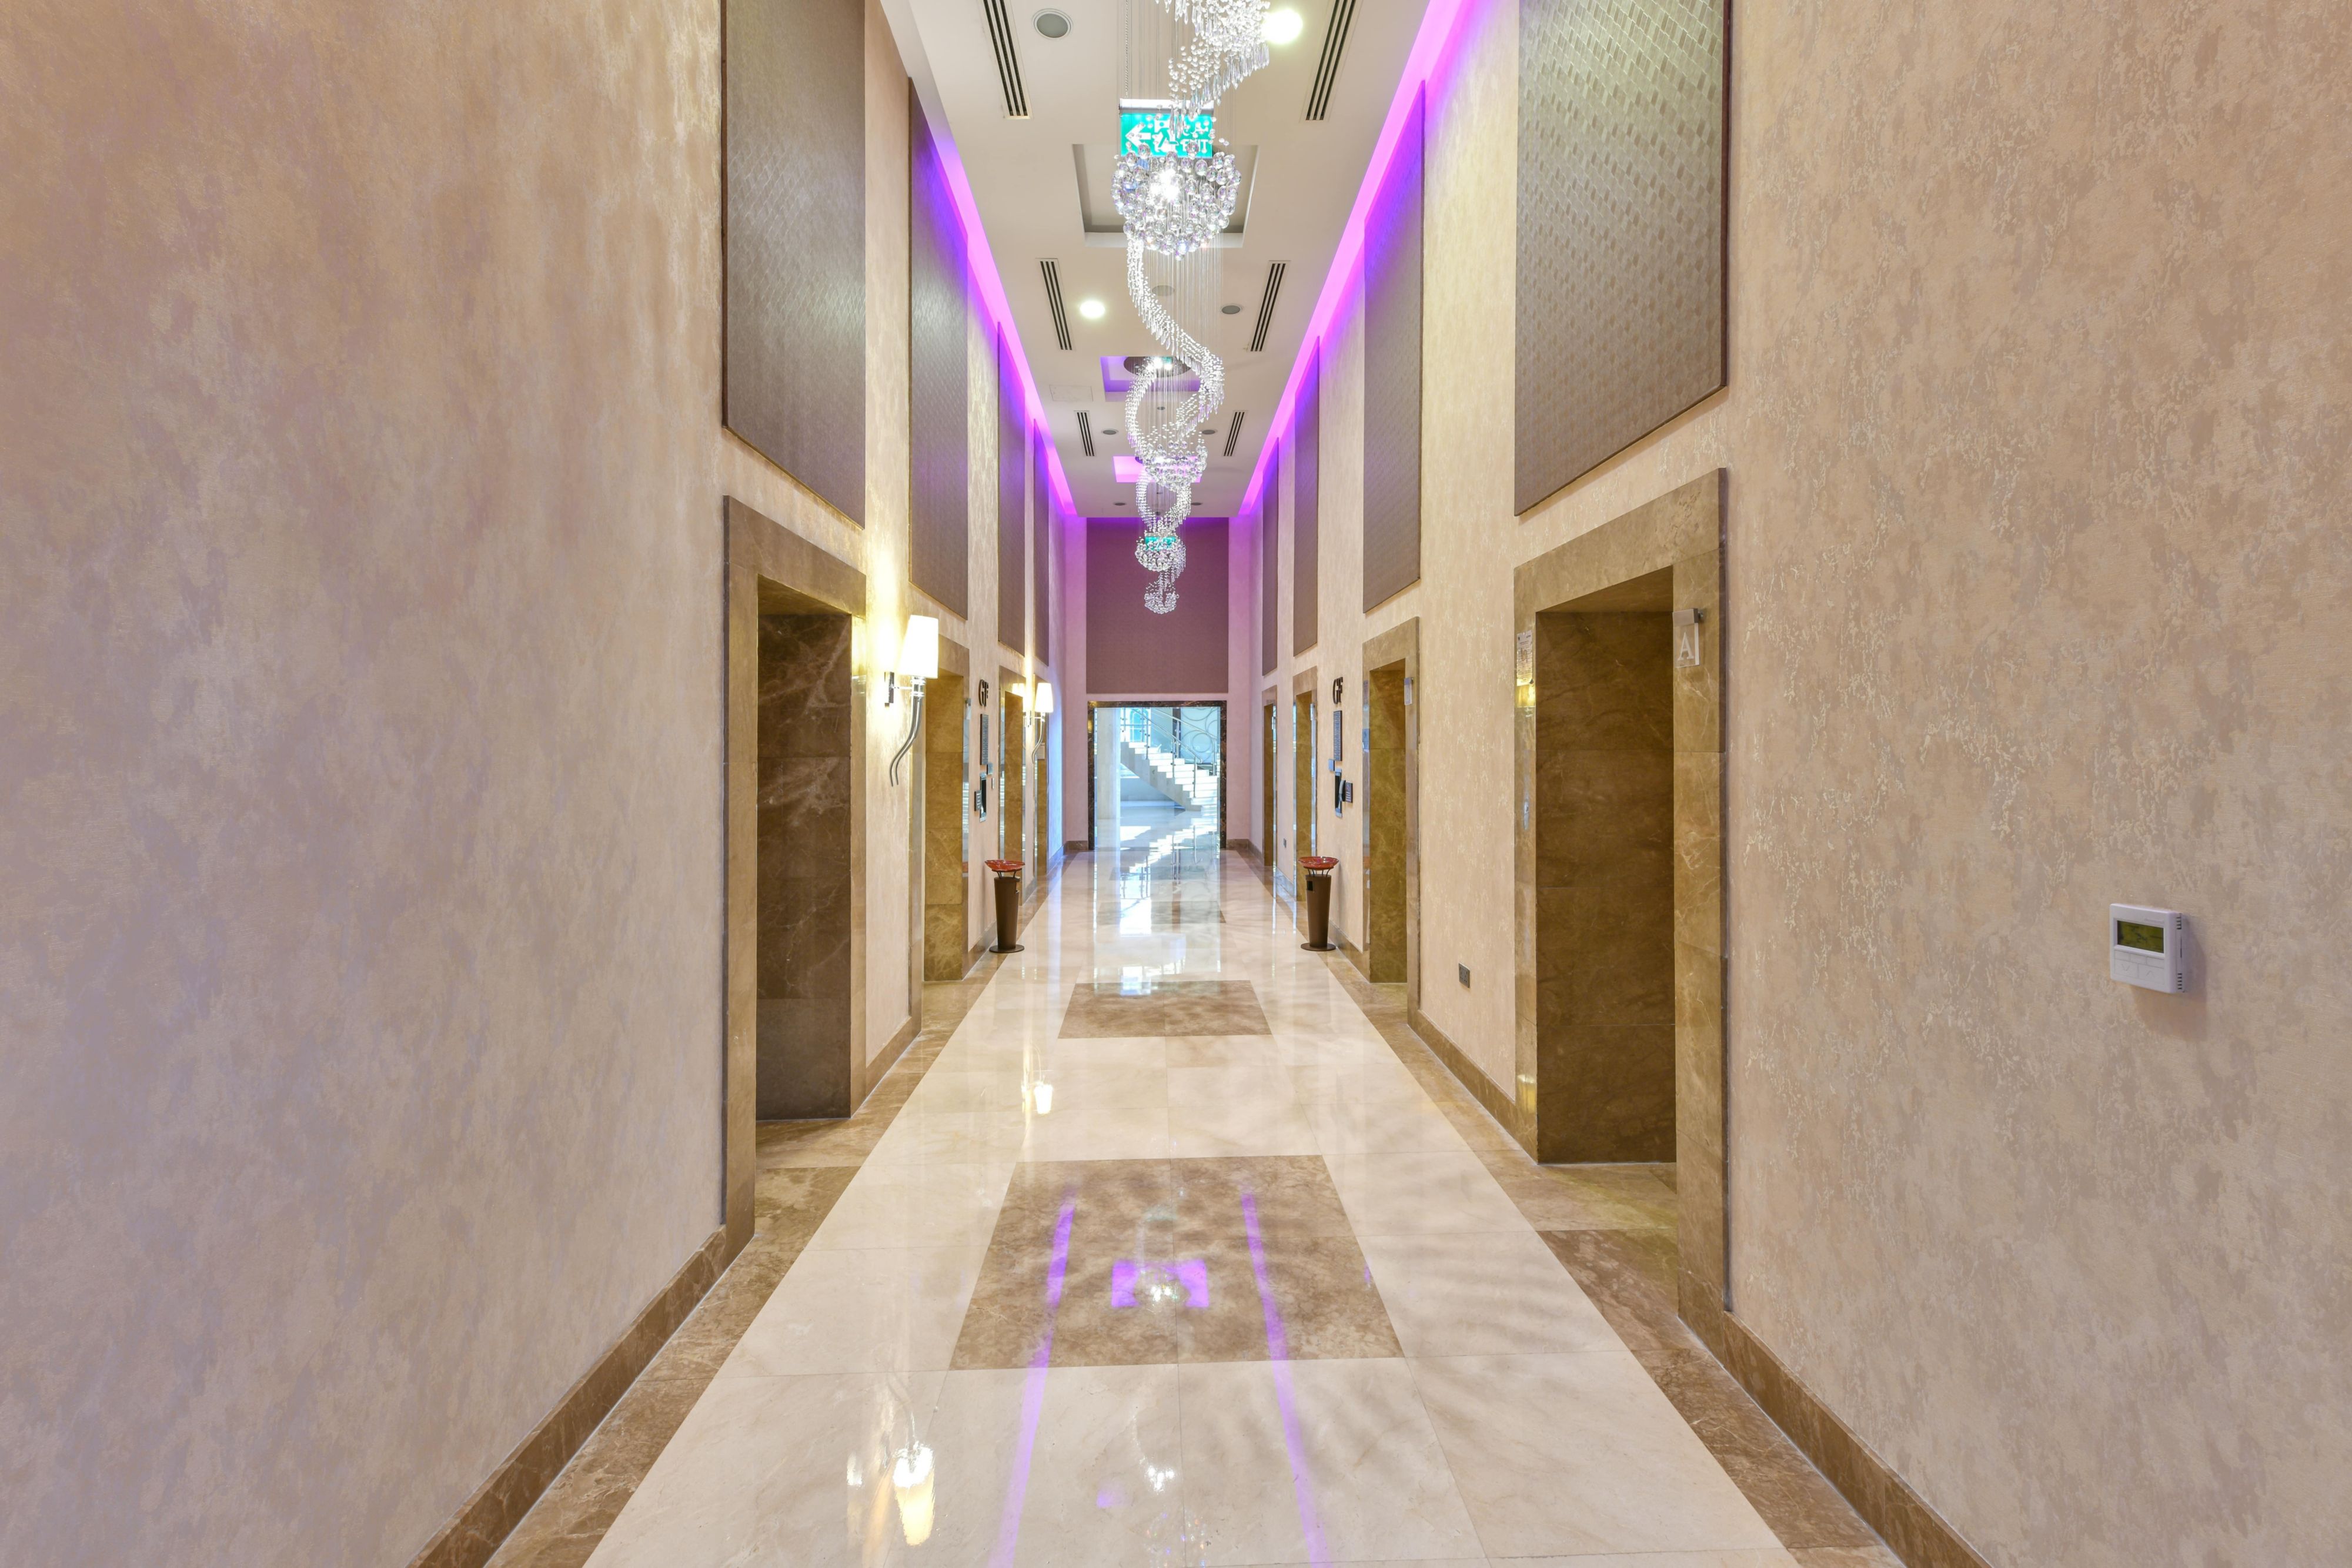 Hotel Hallway at the lobby level